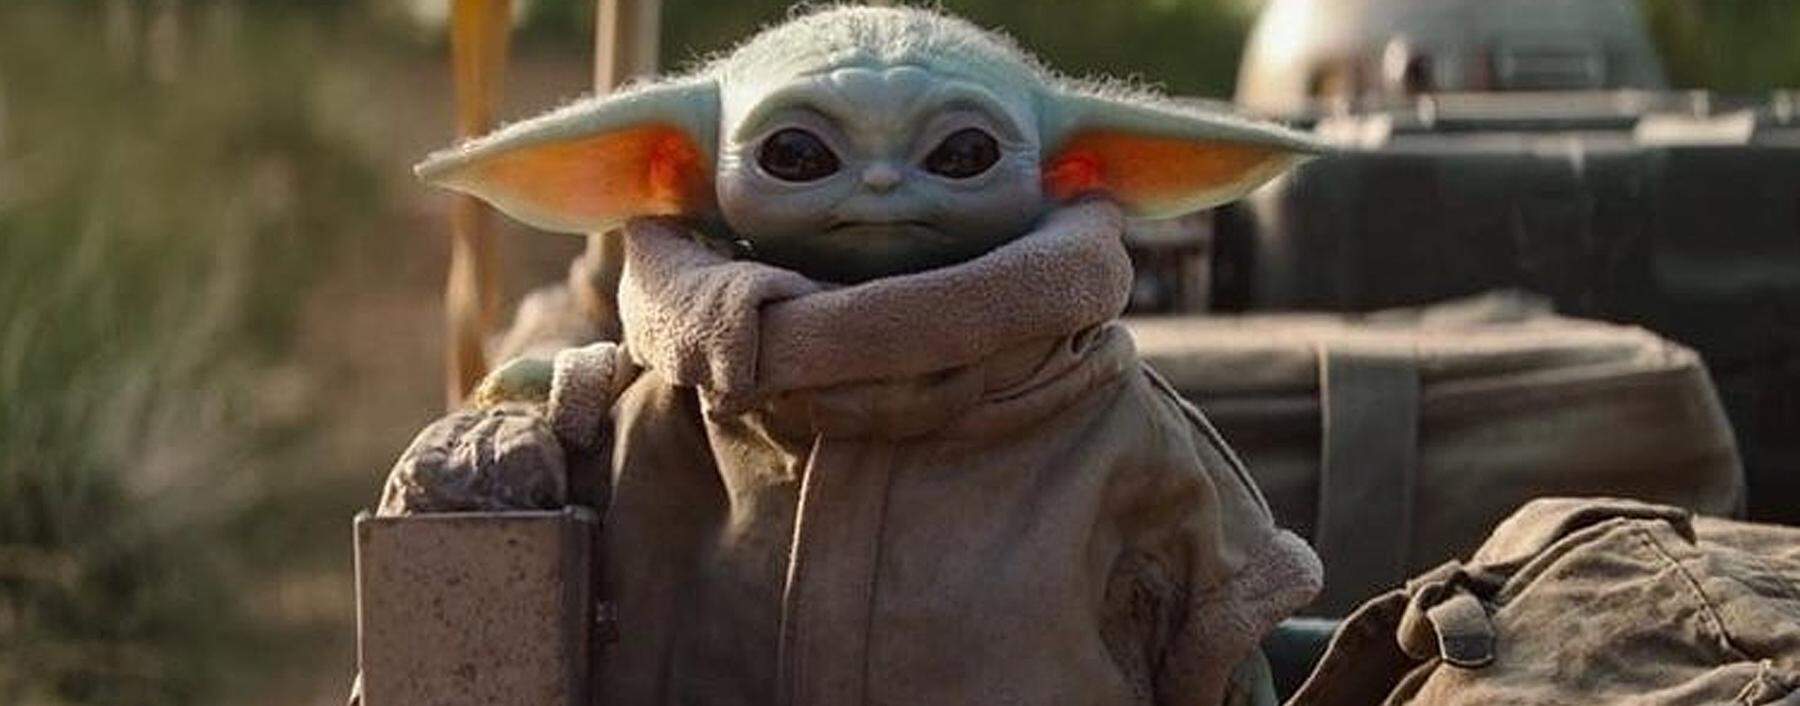 Disneys Marketing-Coup: Baby Yoda entzückt das Internet.